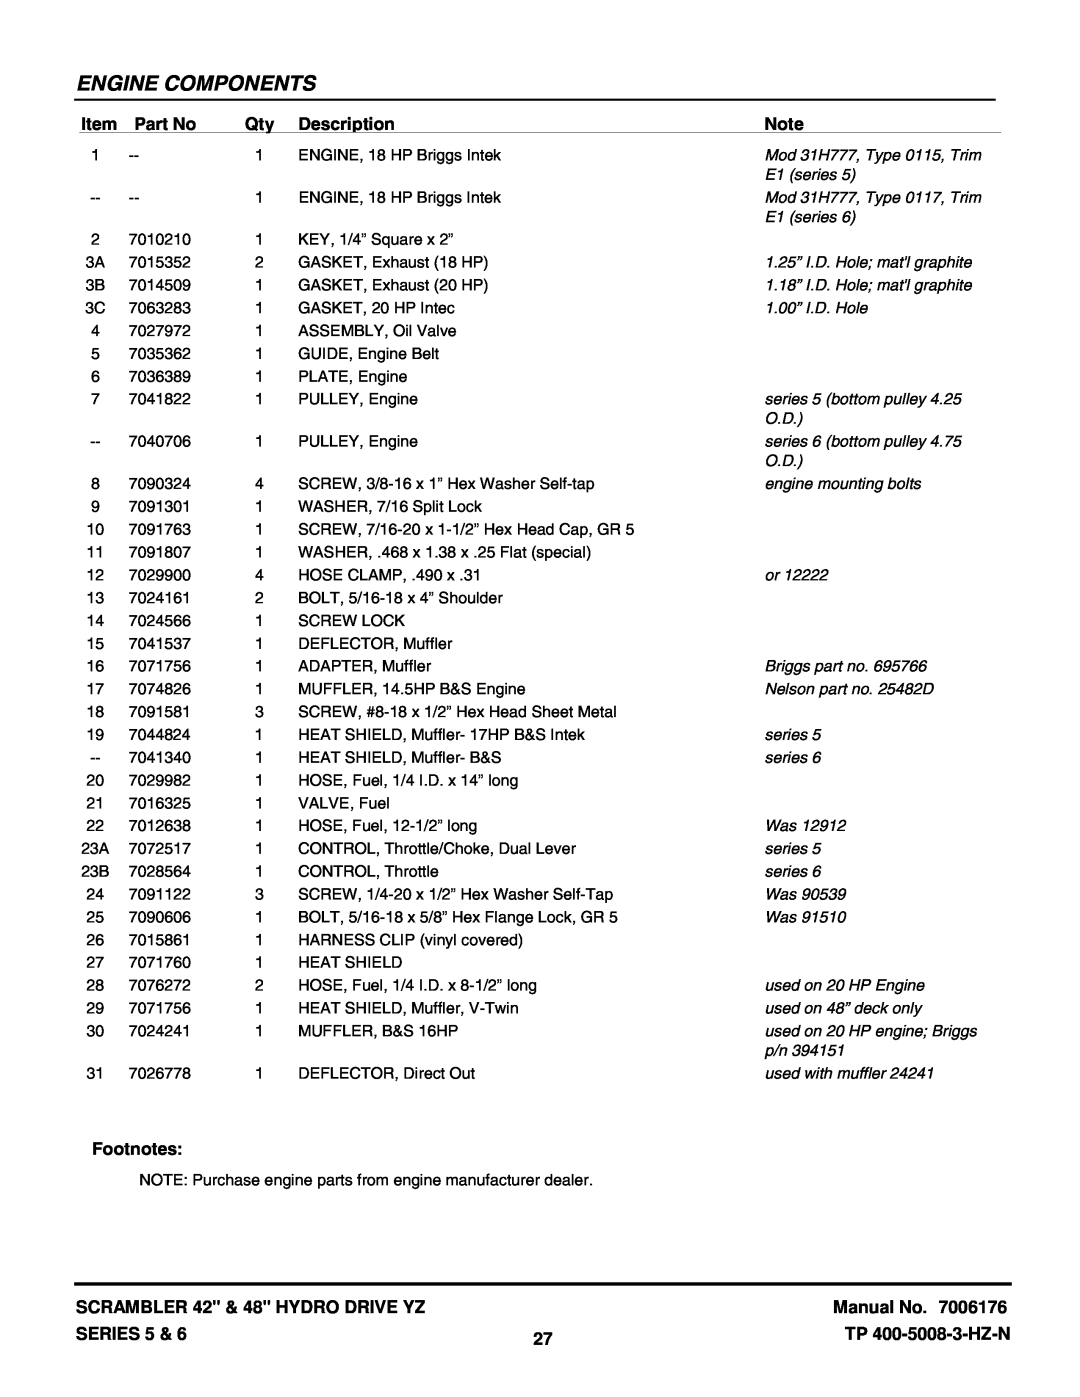 Snapper YZ20486BVE Engine Components, Description, Footnotes, SCRAMBLER 42 & 48 HYDRO DRIVE YZ, Manual No, Series, series 